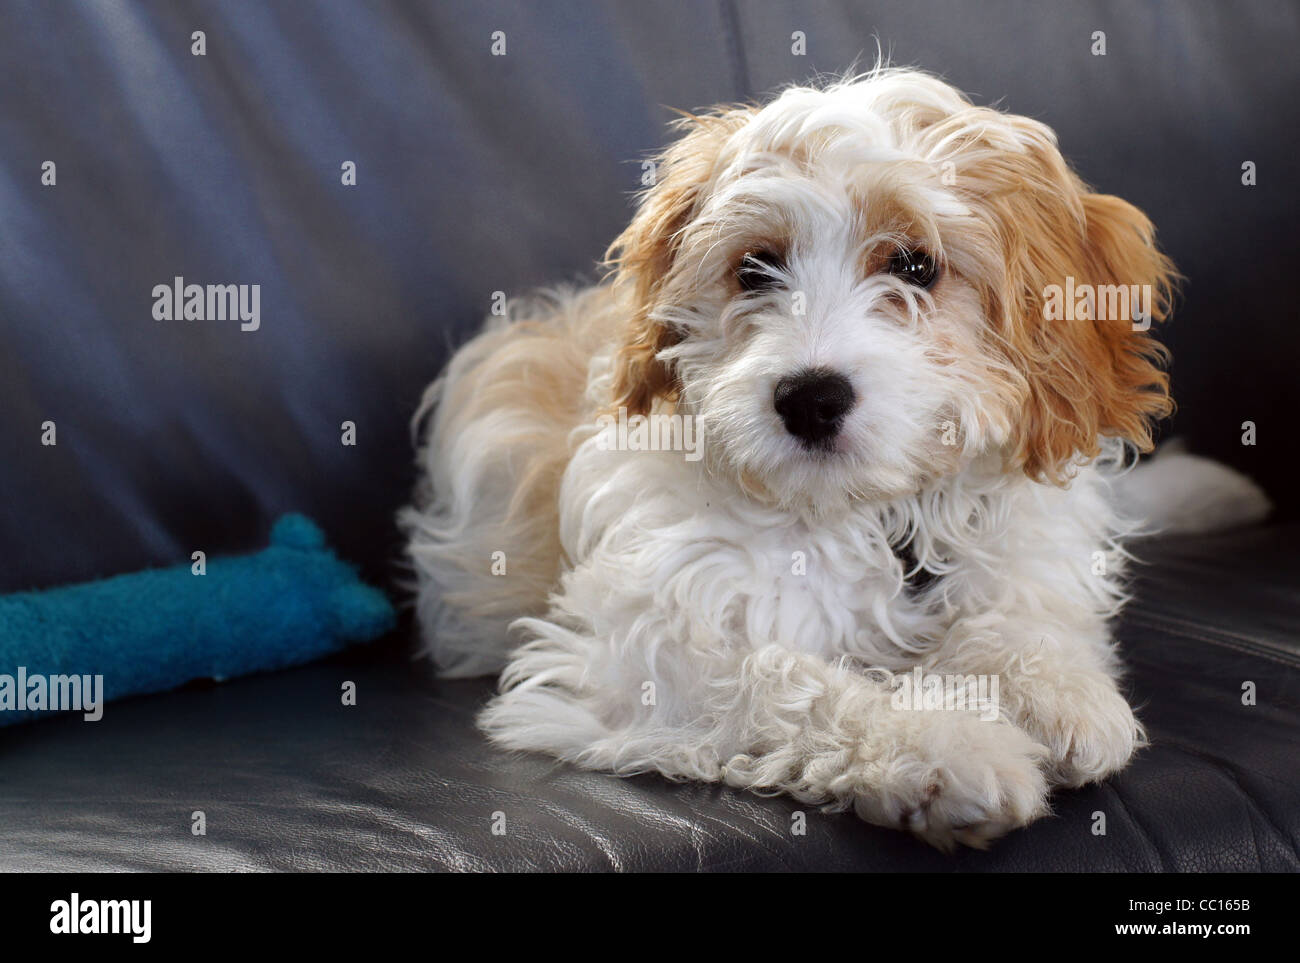 Cavapoo Cavalier King Charles Spaniel X Poodle Cross Puppy On Sofa Stock Photo Alamy